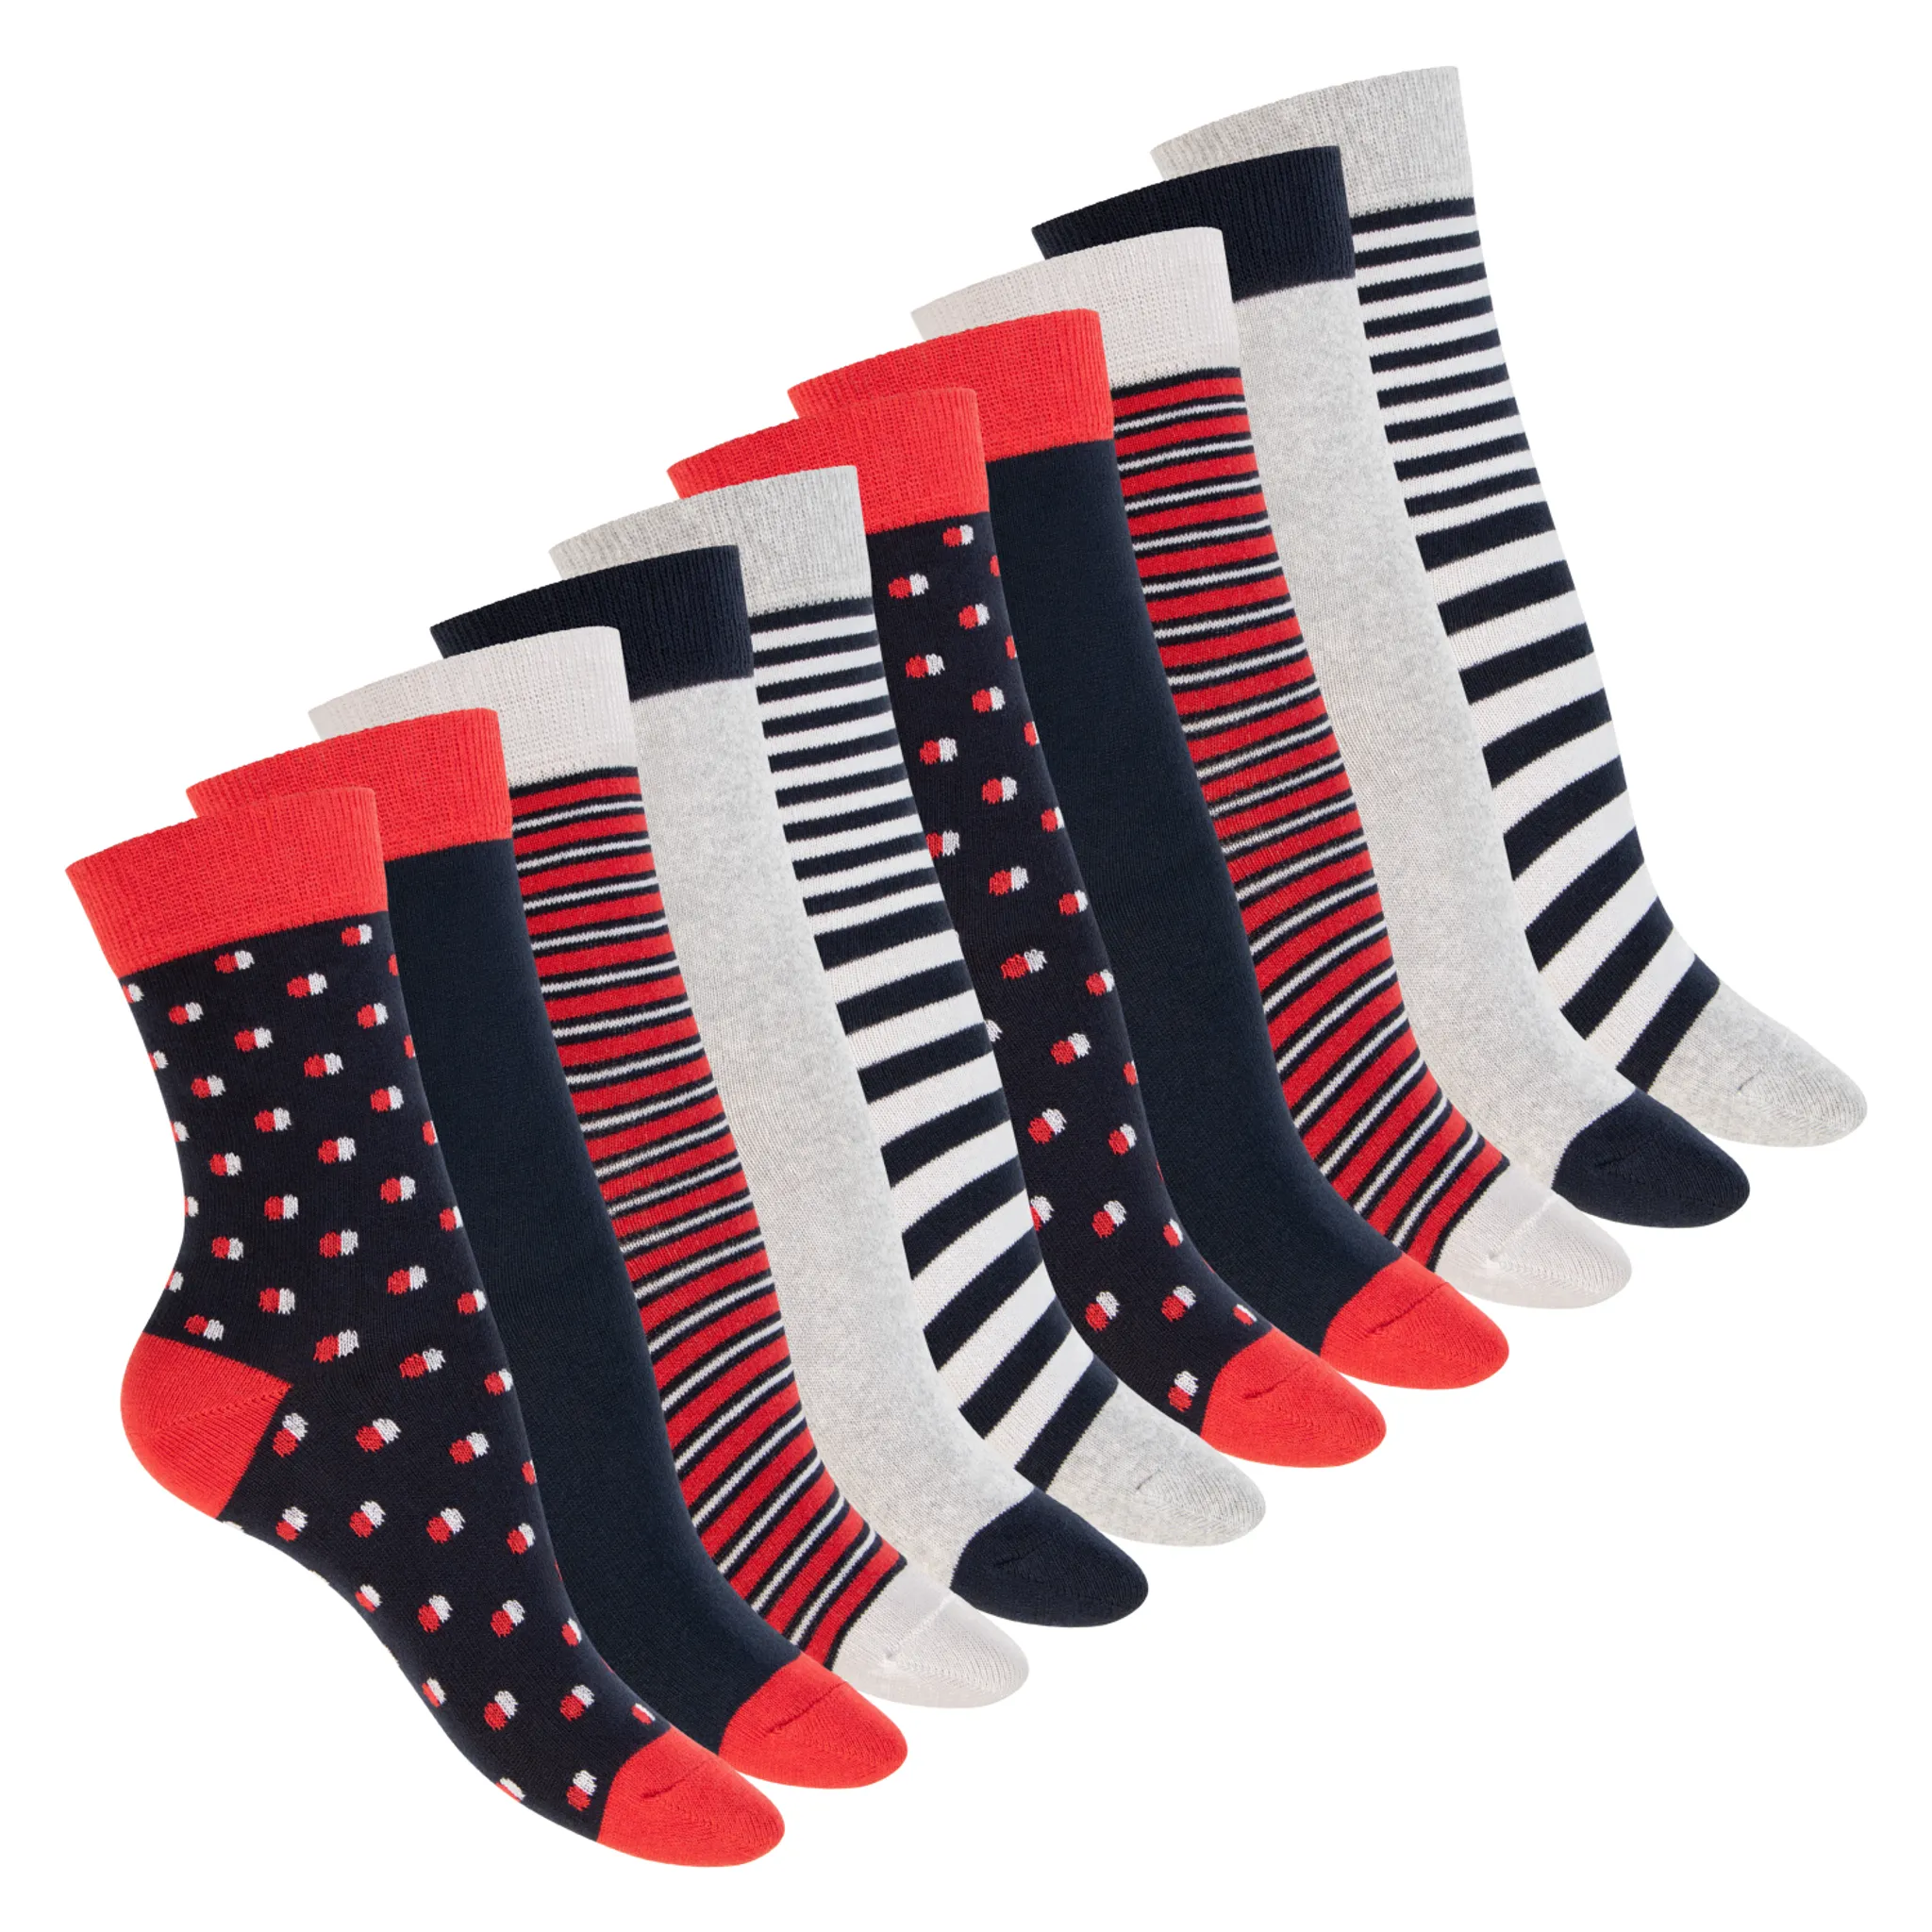 Celodoro Damen Süße Eco Socken (10 Paar),